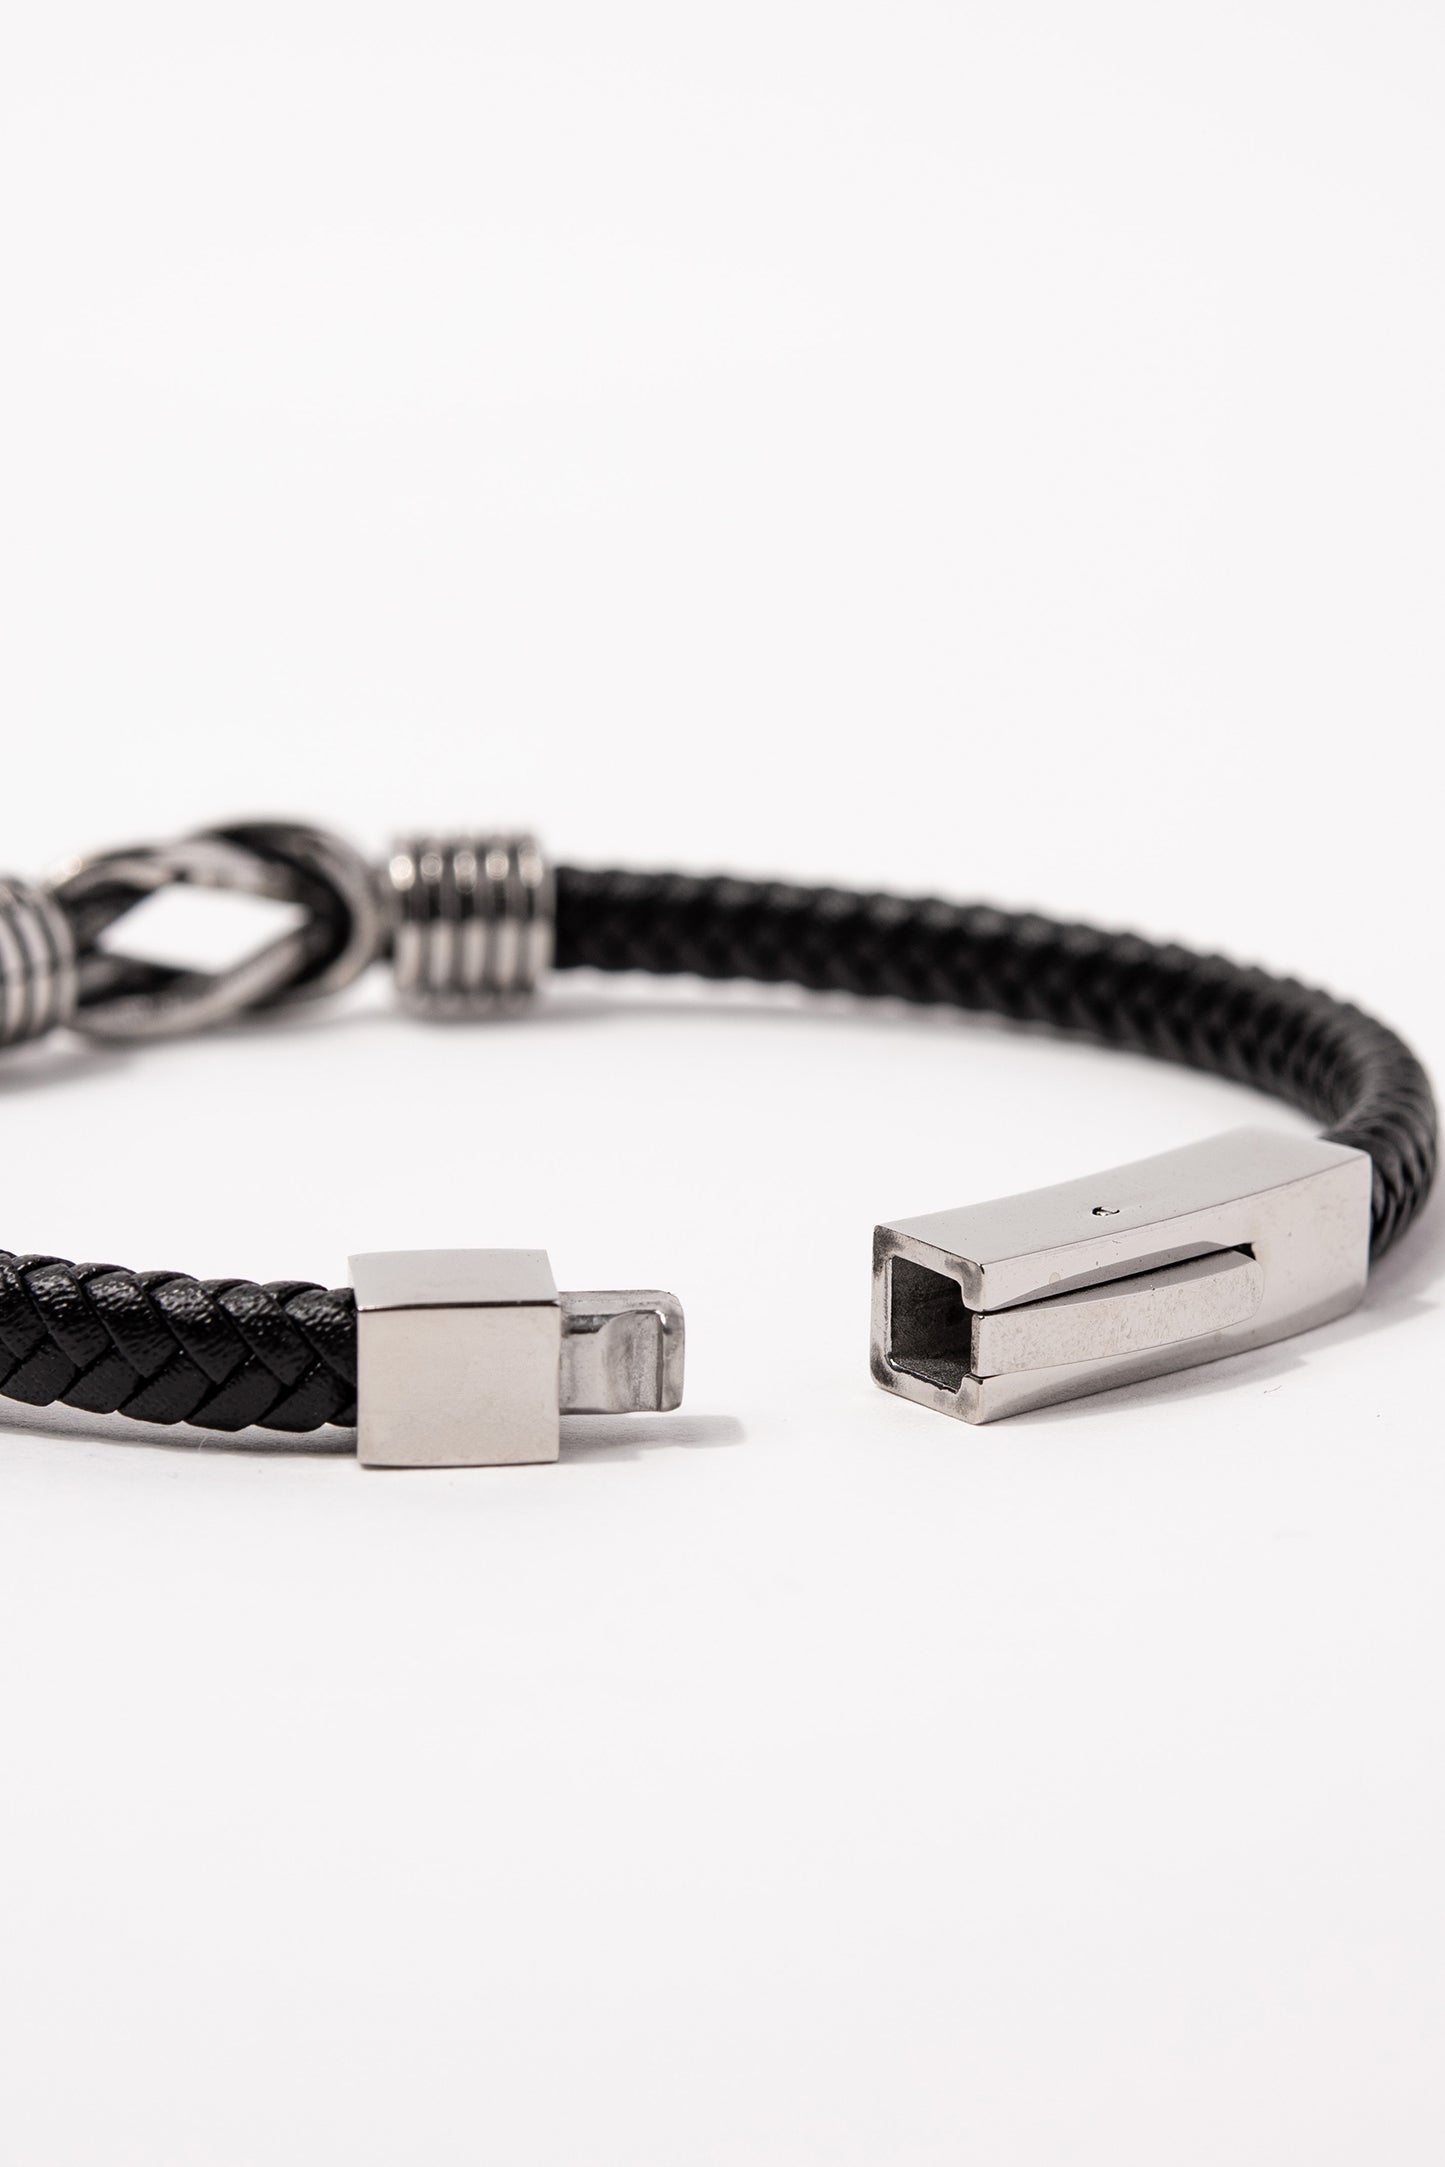 Stainless Steel Black Cord Bracelet